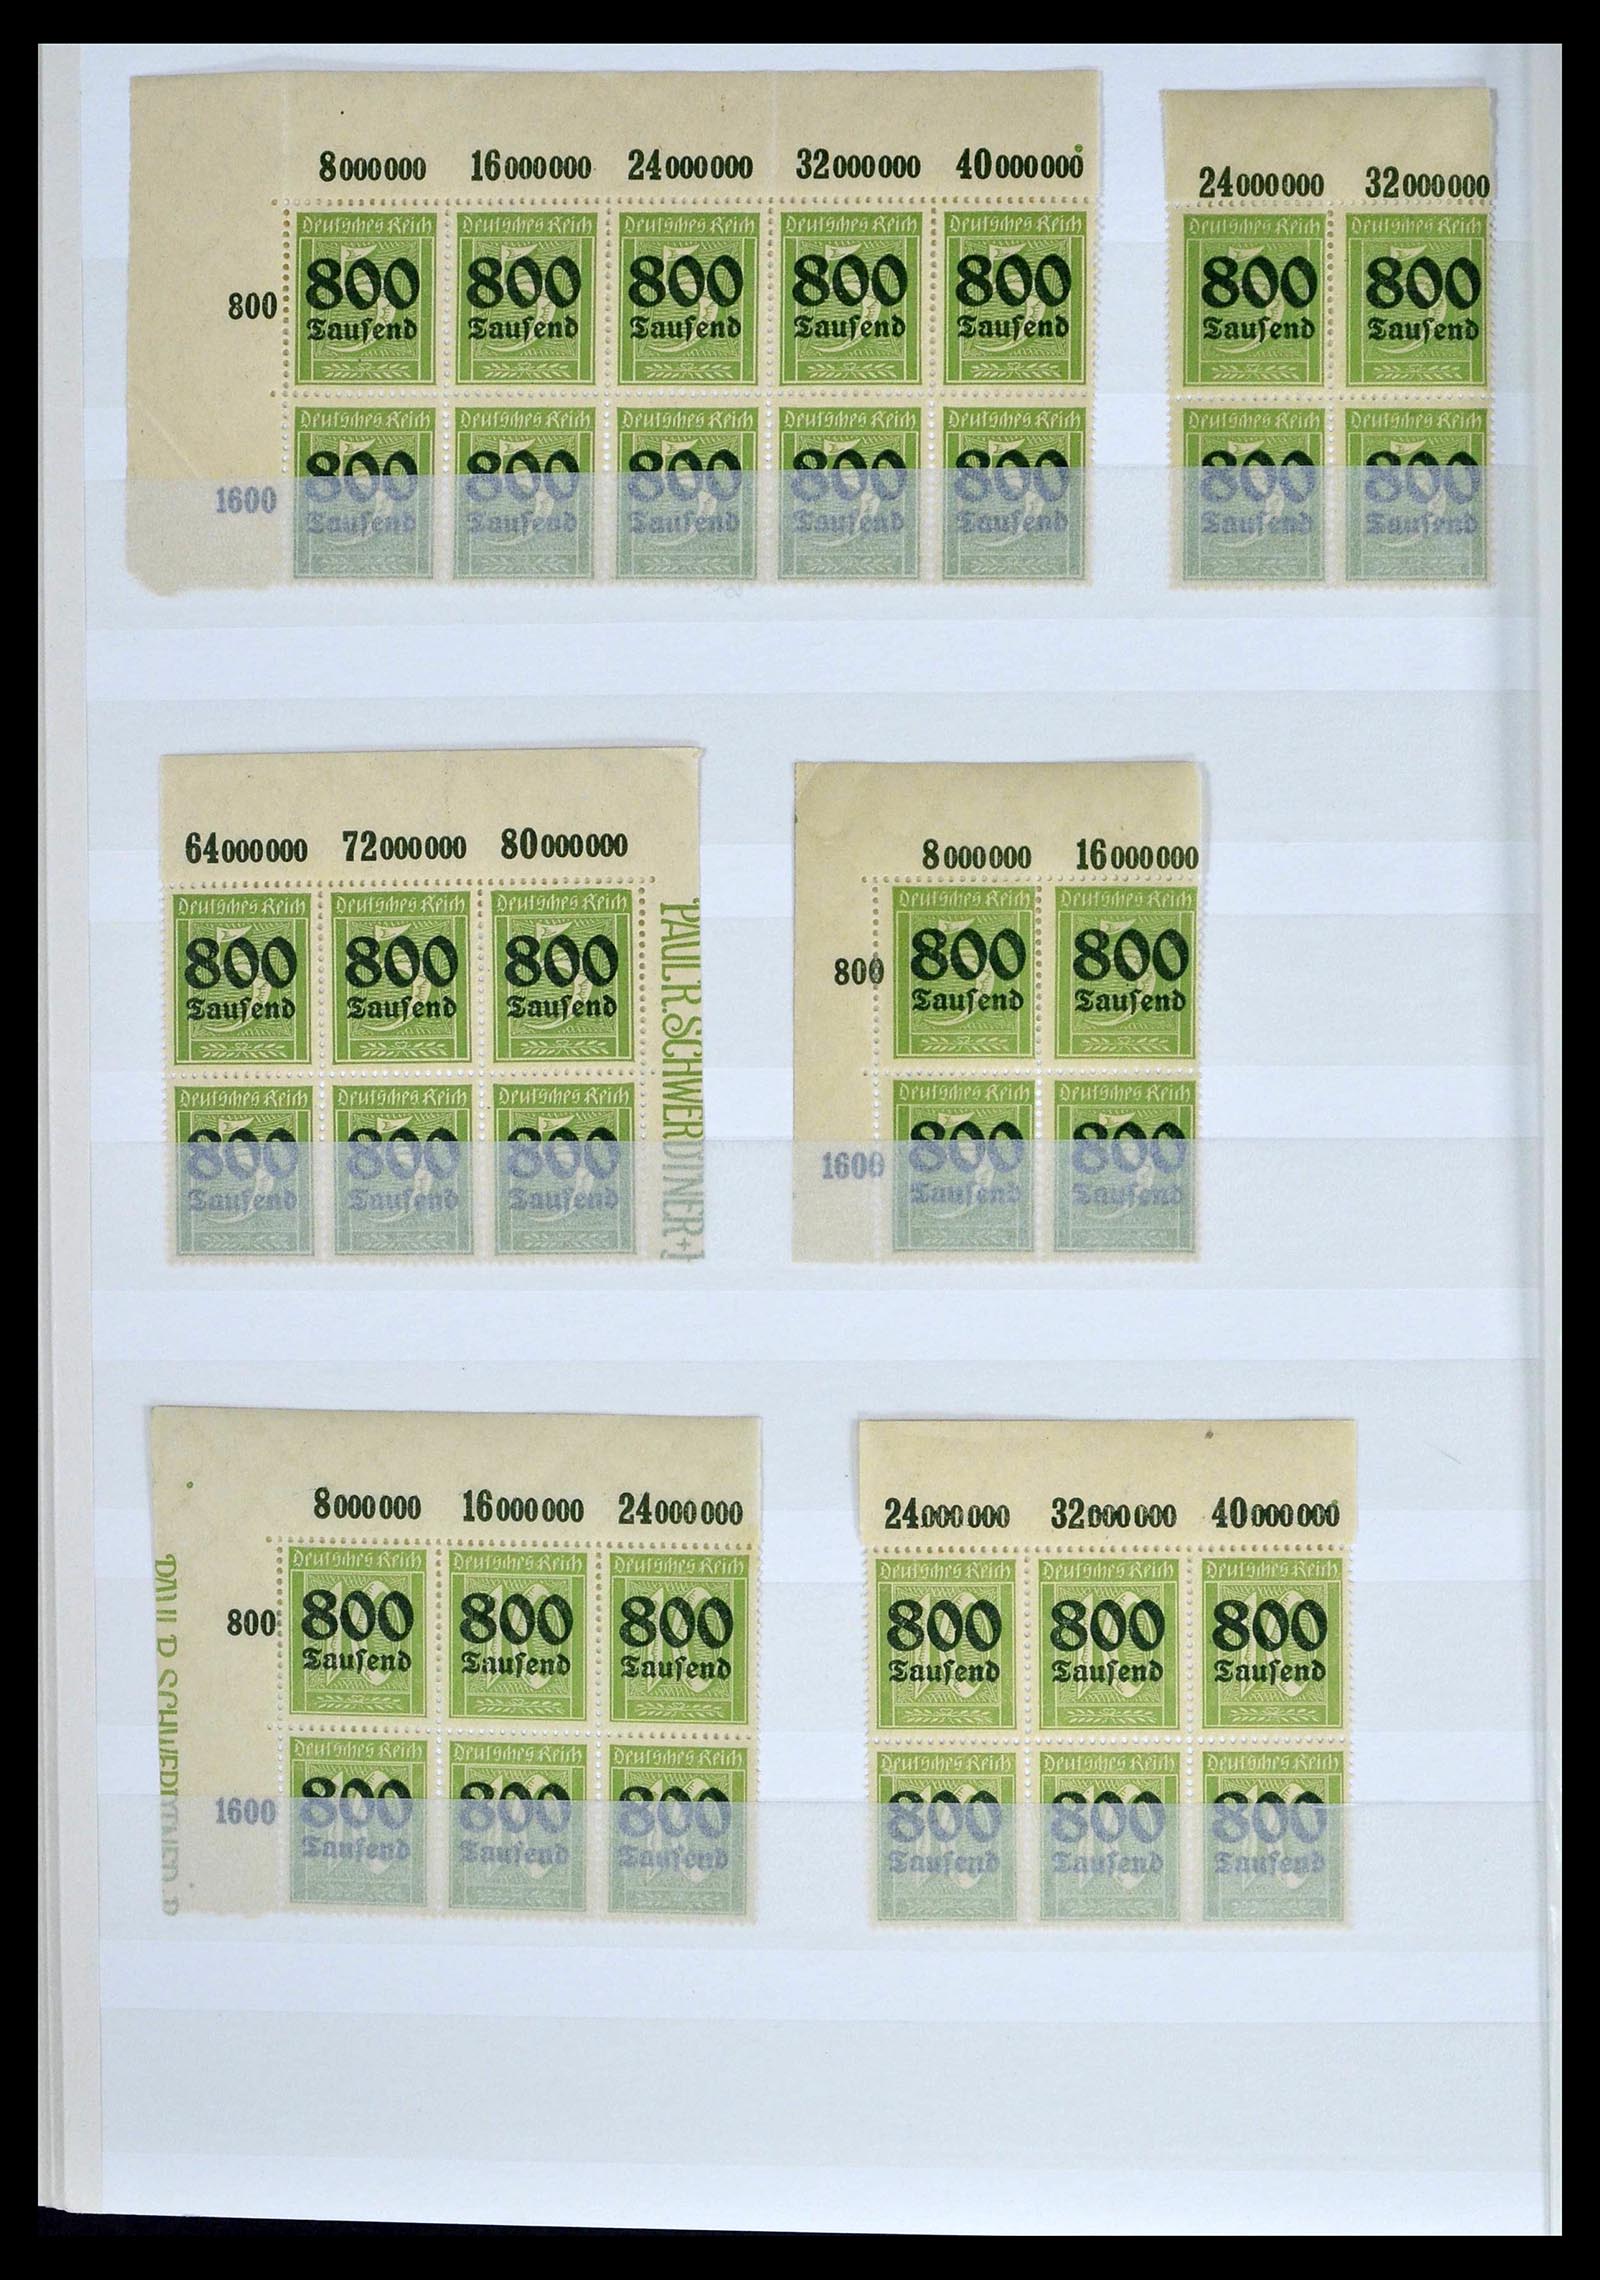 39254 0056 - Stamp collection 39254 German Reich MNH top margins.